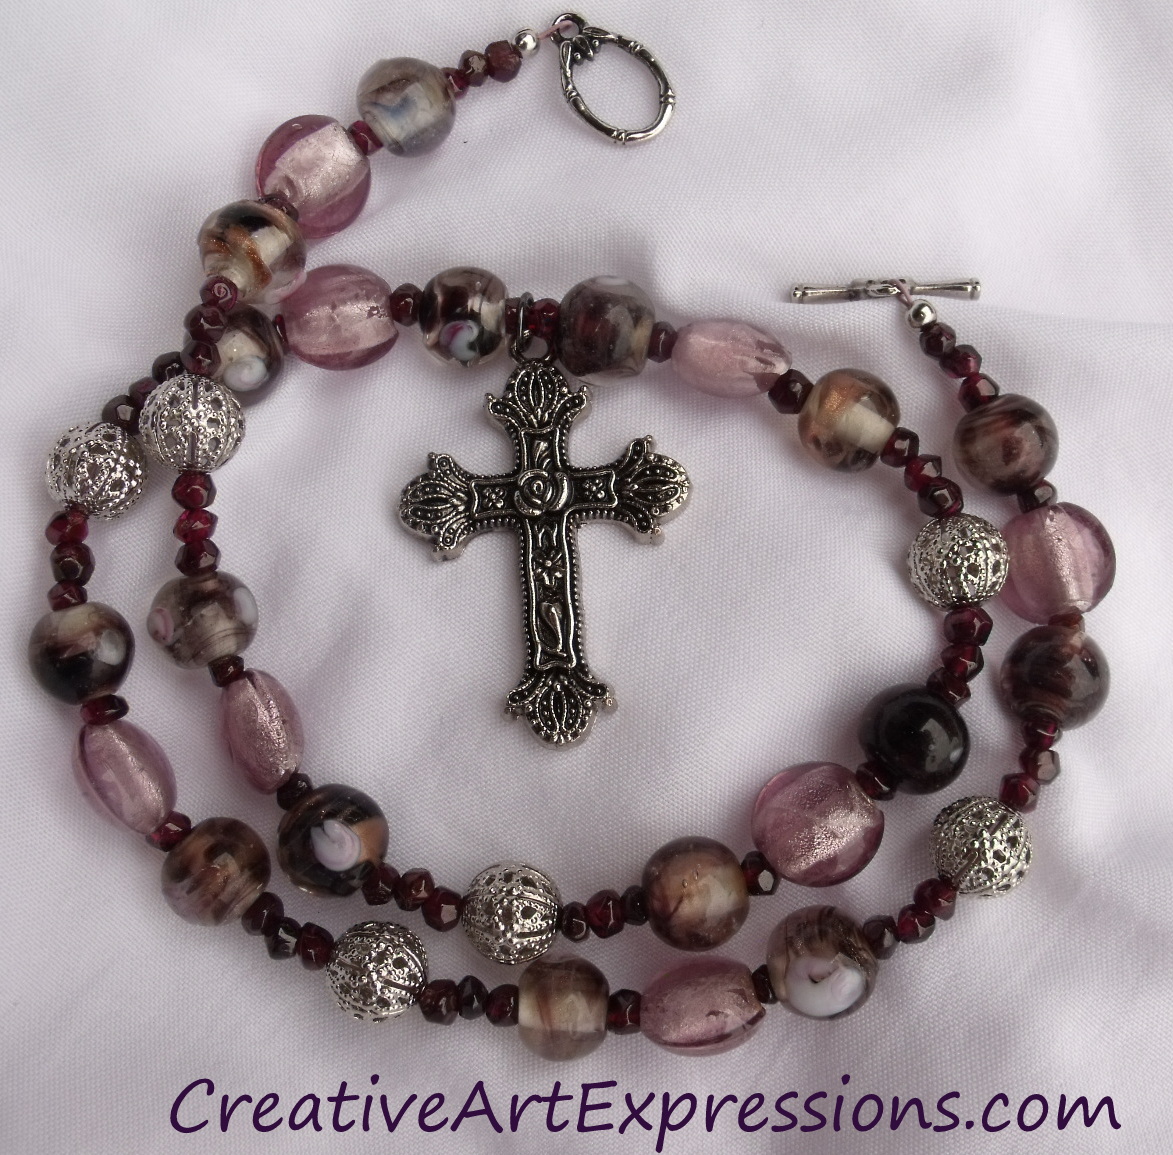 Creative Art Expressions Handmade Amethyst Prayer Beads Necklace Jewelry Design